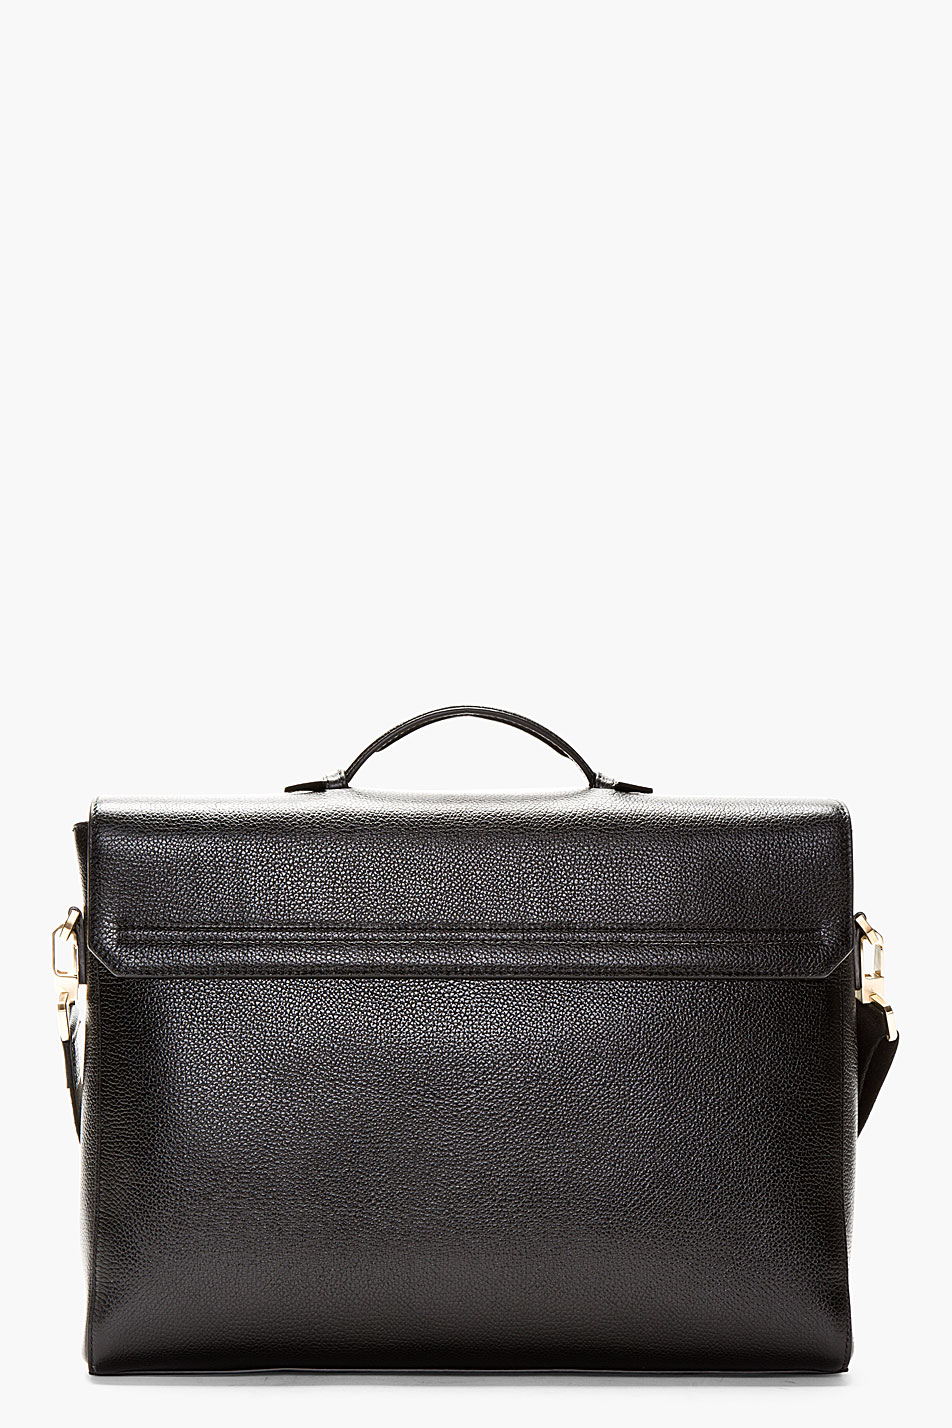 Lyst - Thom Browne Black Grained Leather Messenger Bag in Black for Men